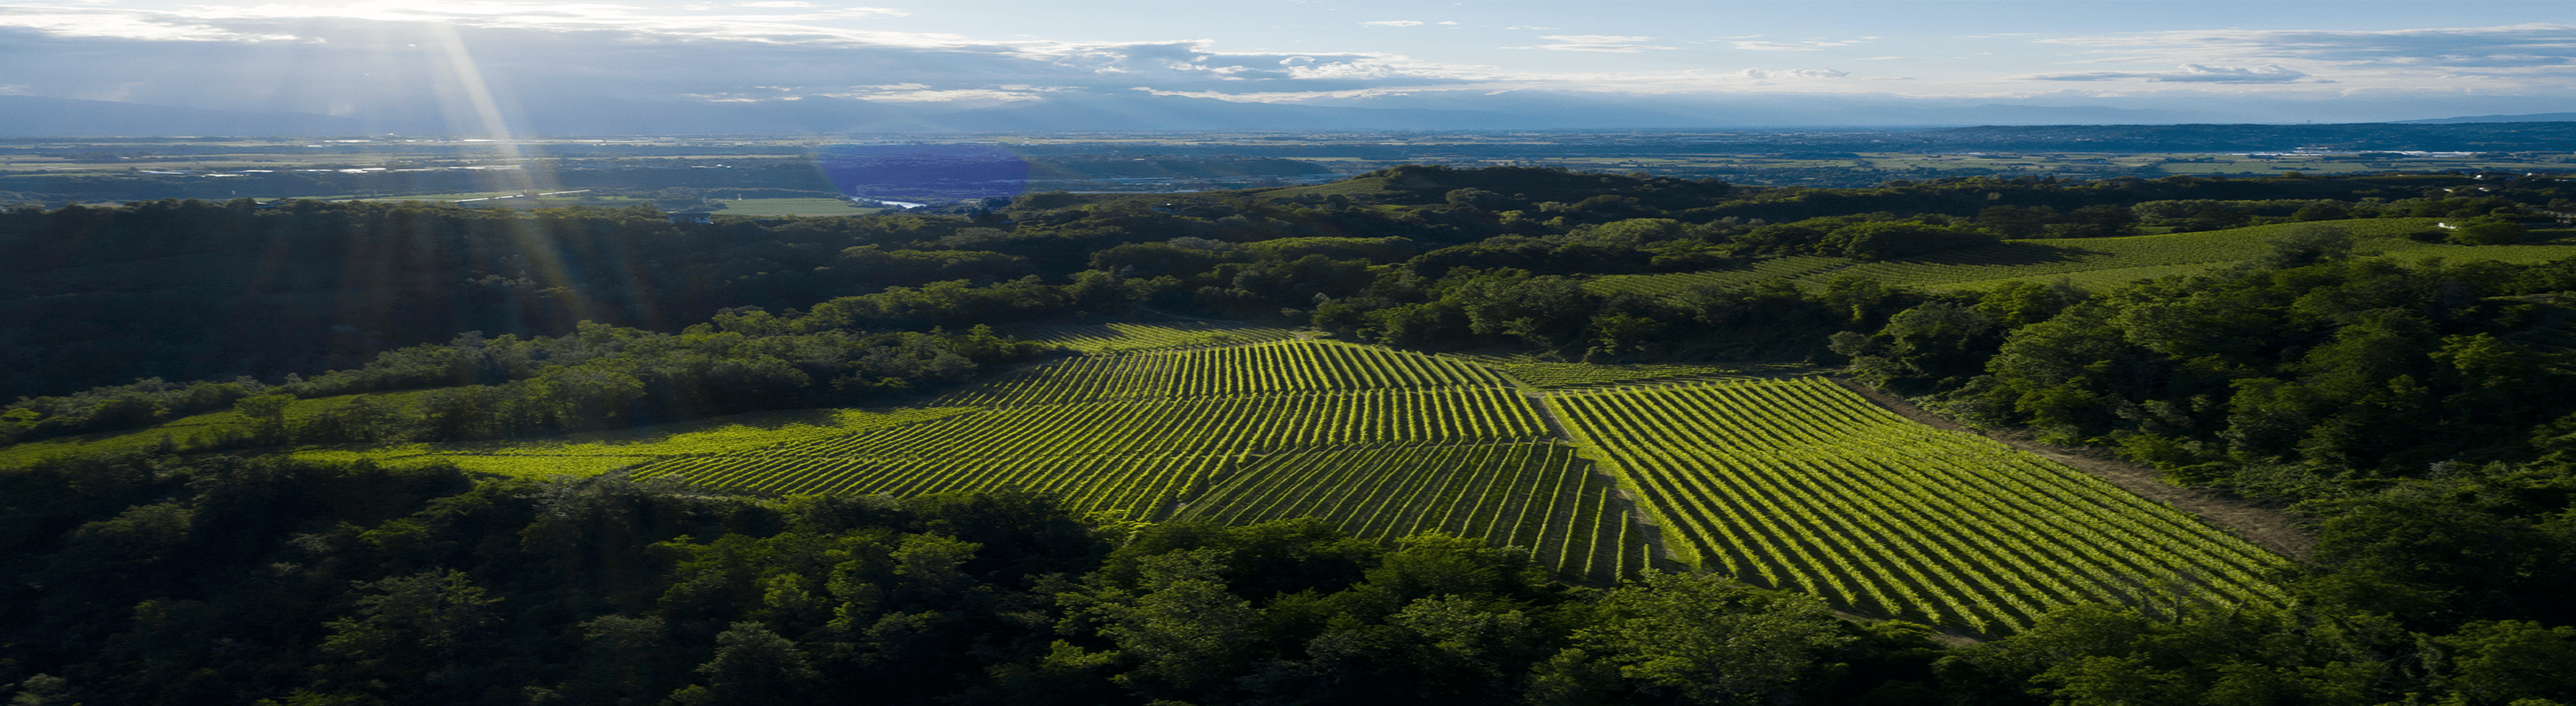 barolo wine region